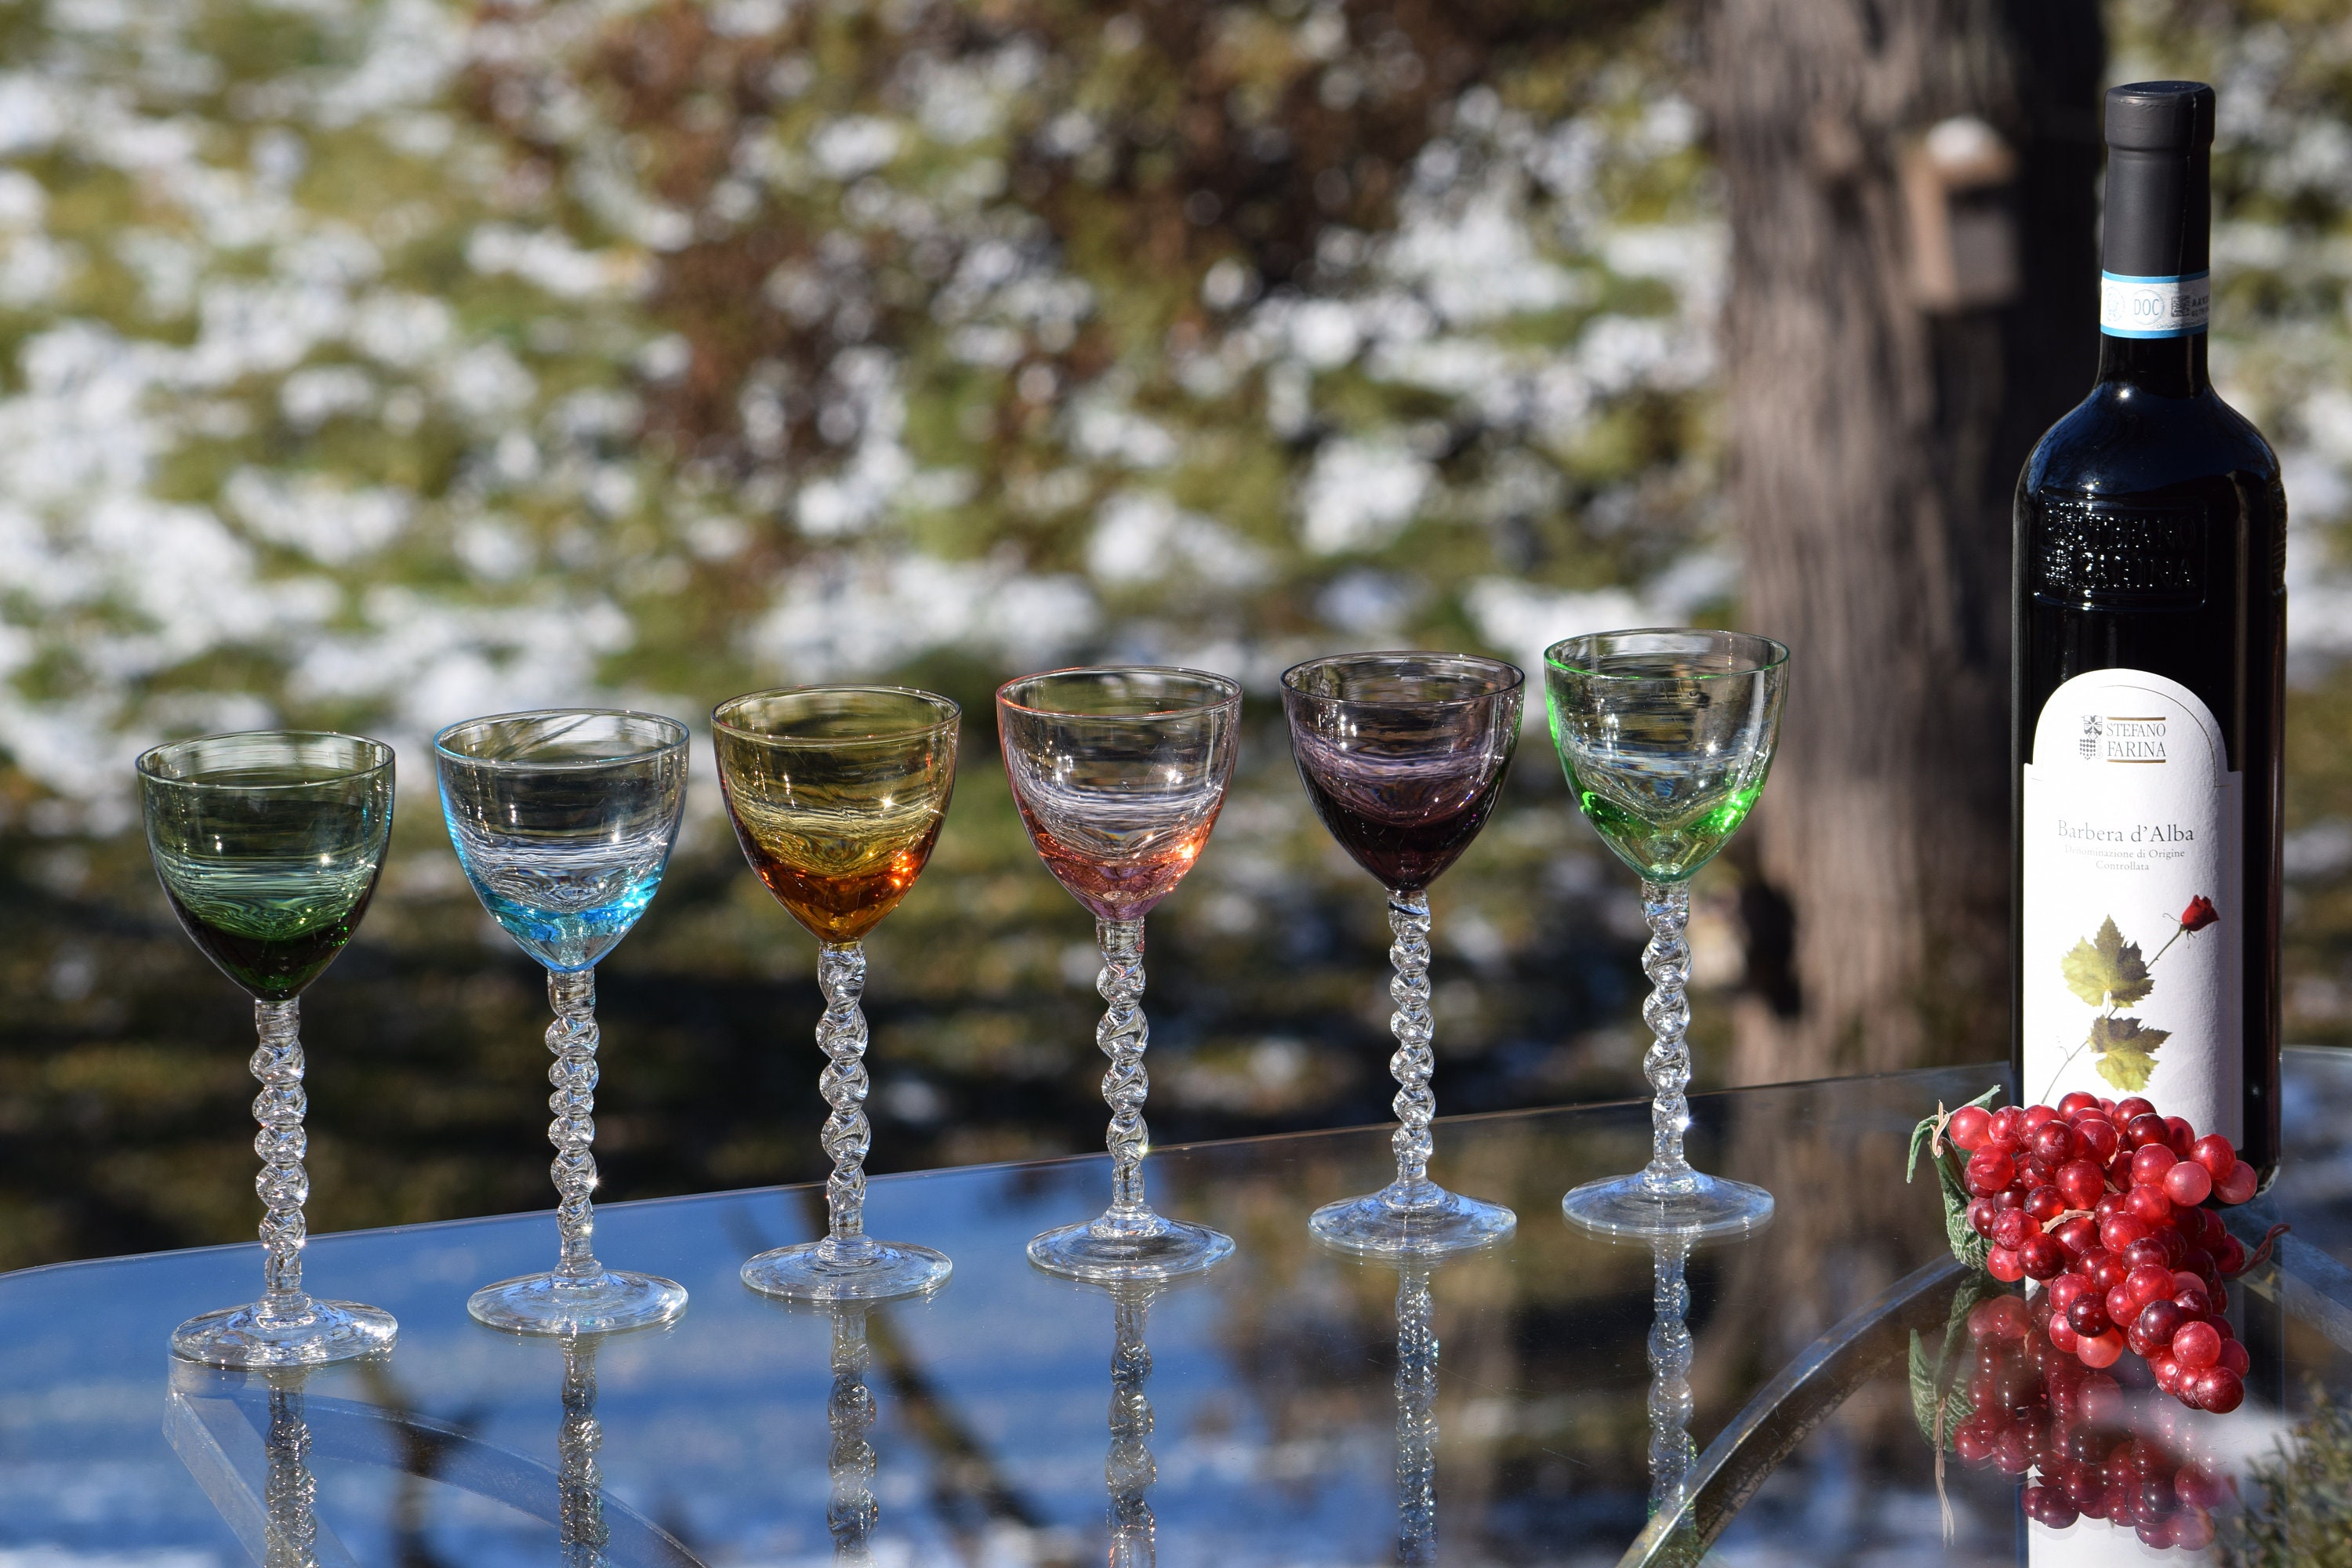 Vintage Multi Colored Clear Twisted Stem Wine Glasses Set of 4, 4